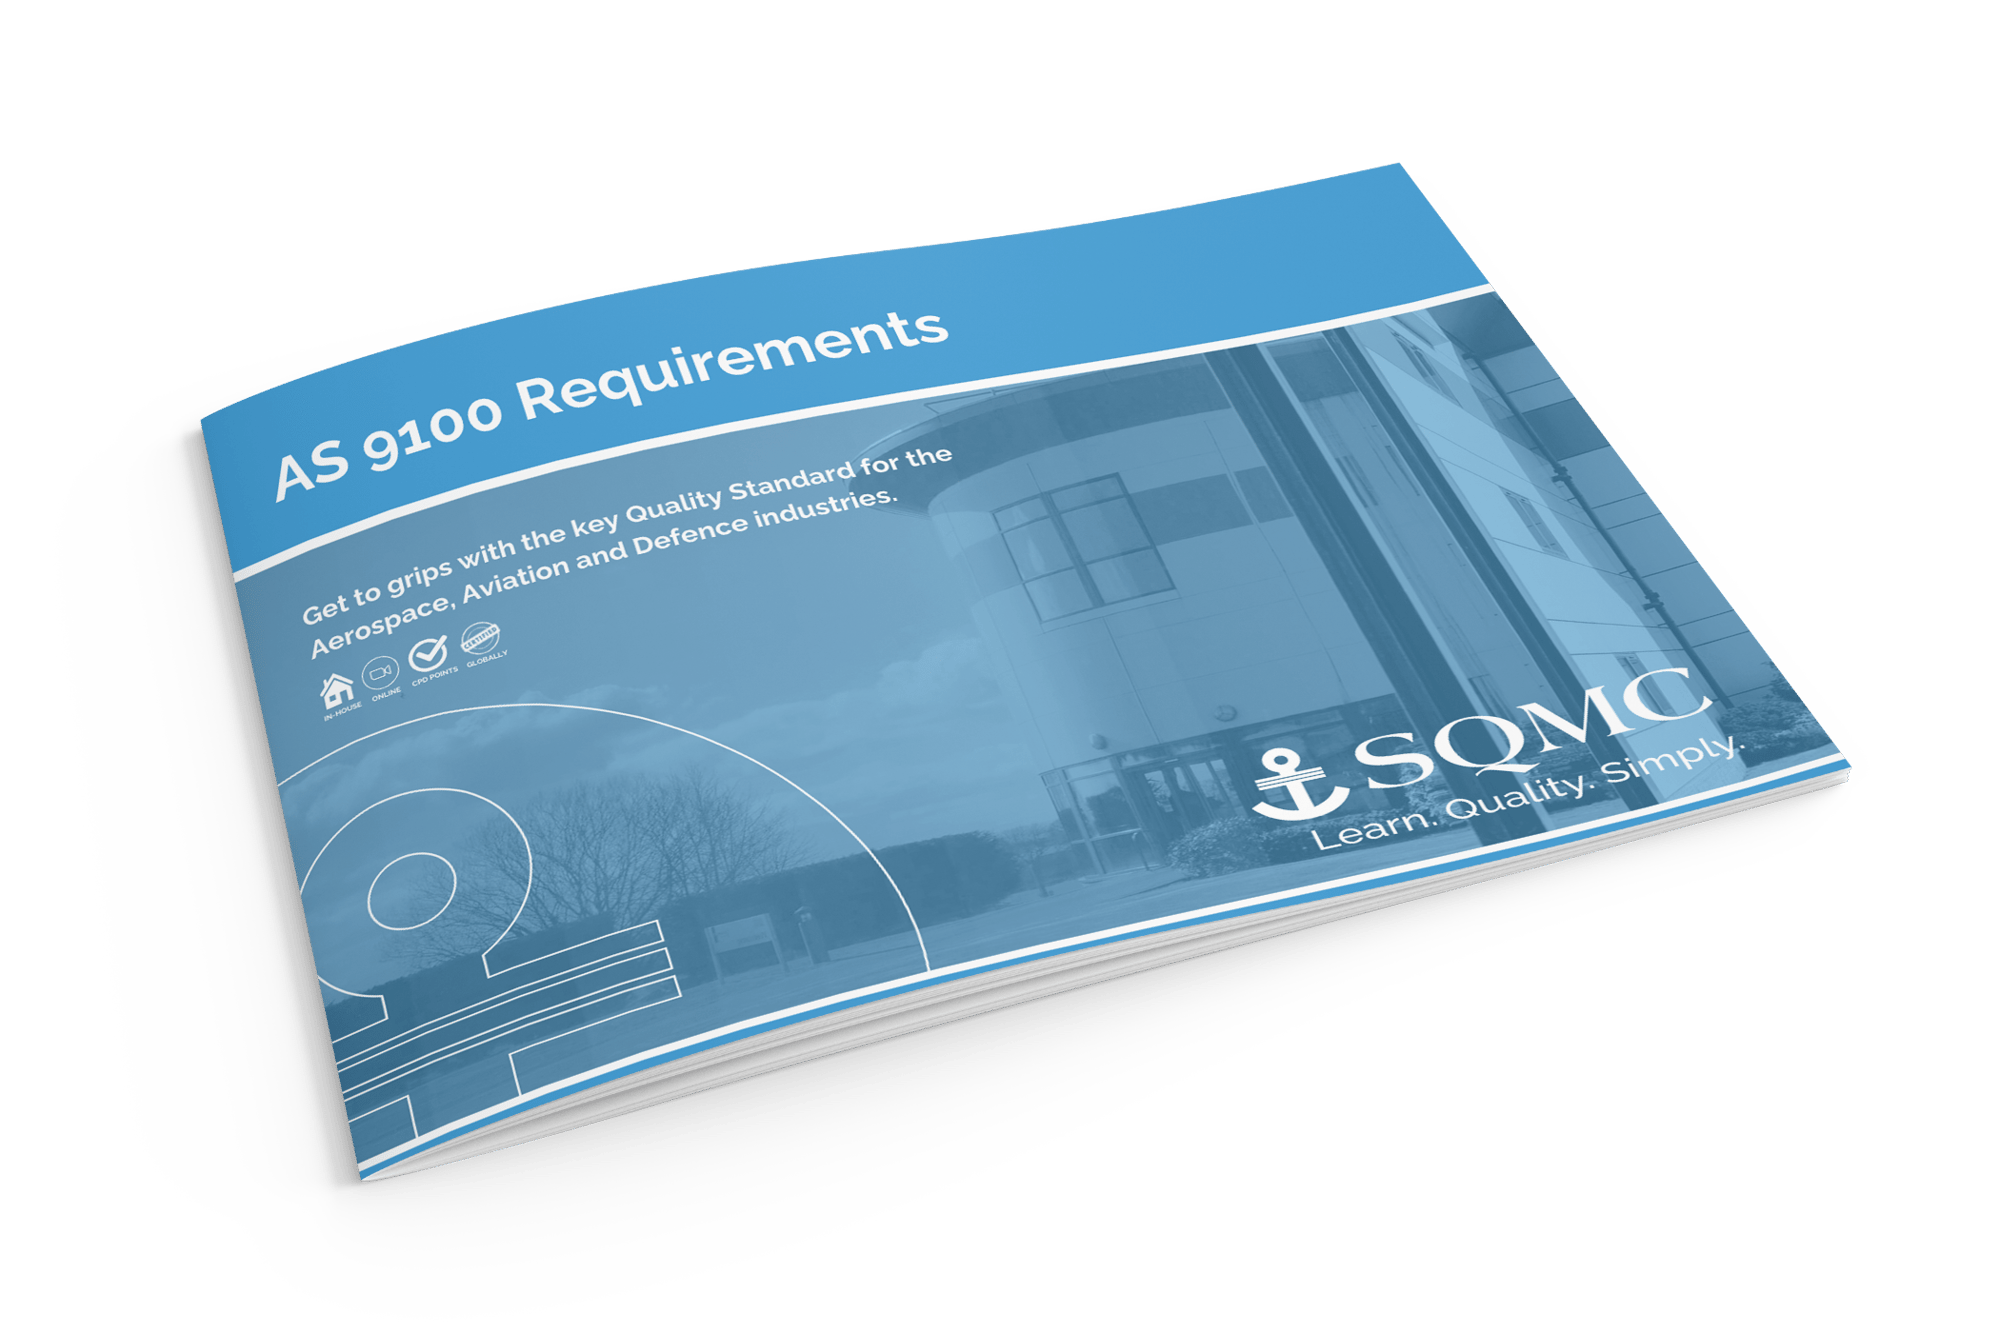 as-91000-requirements-syllabus